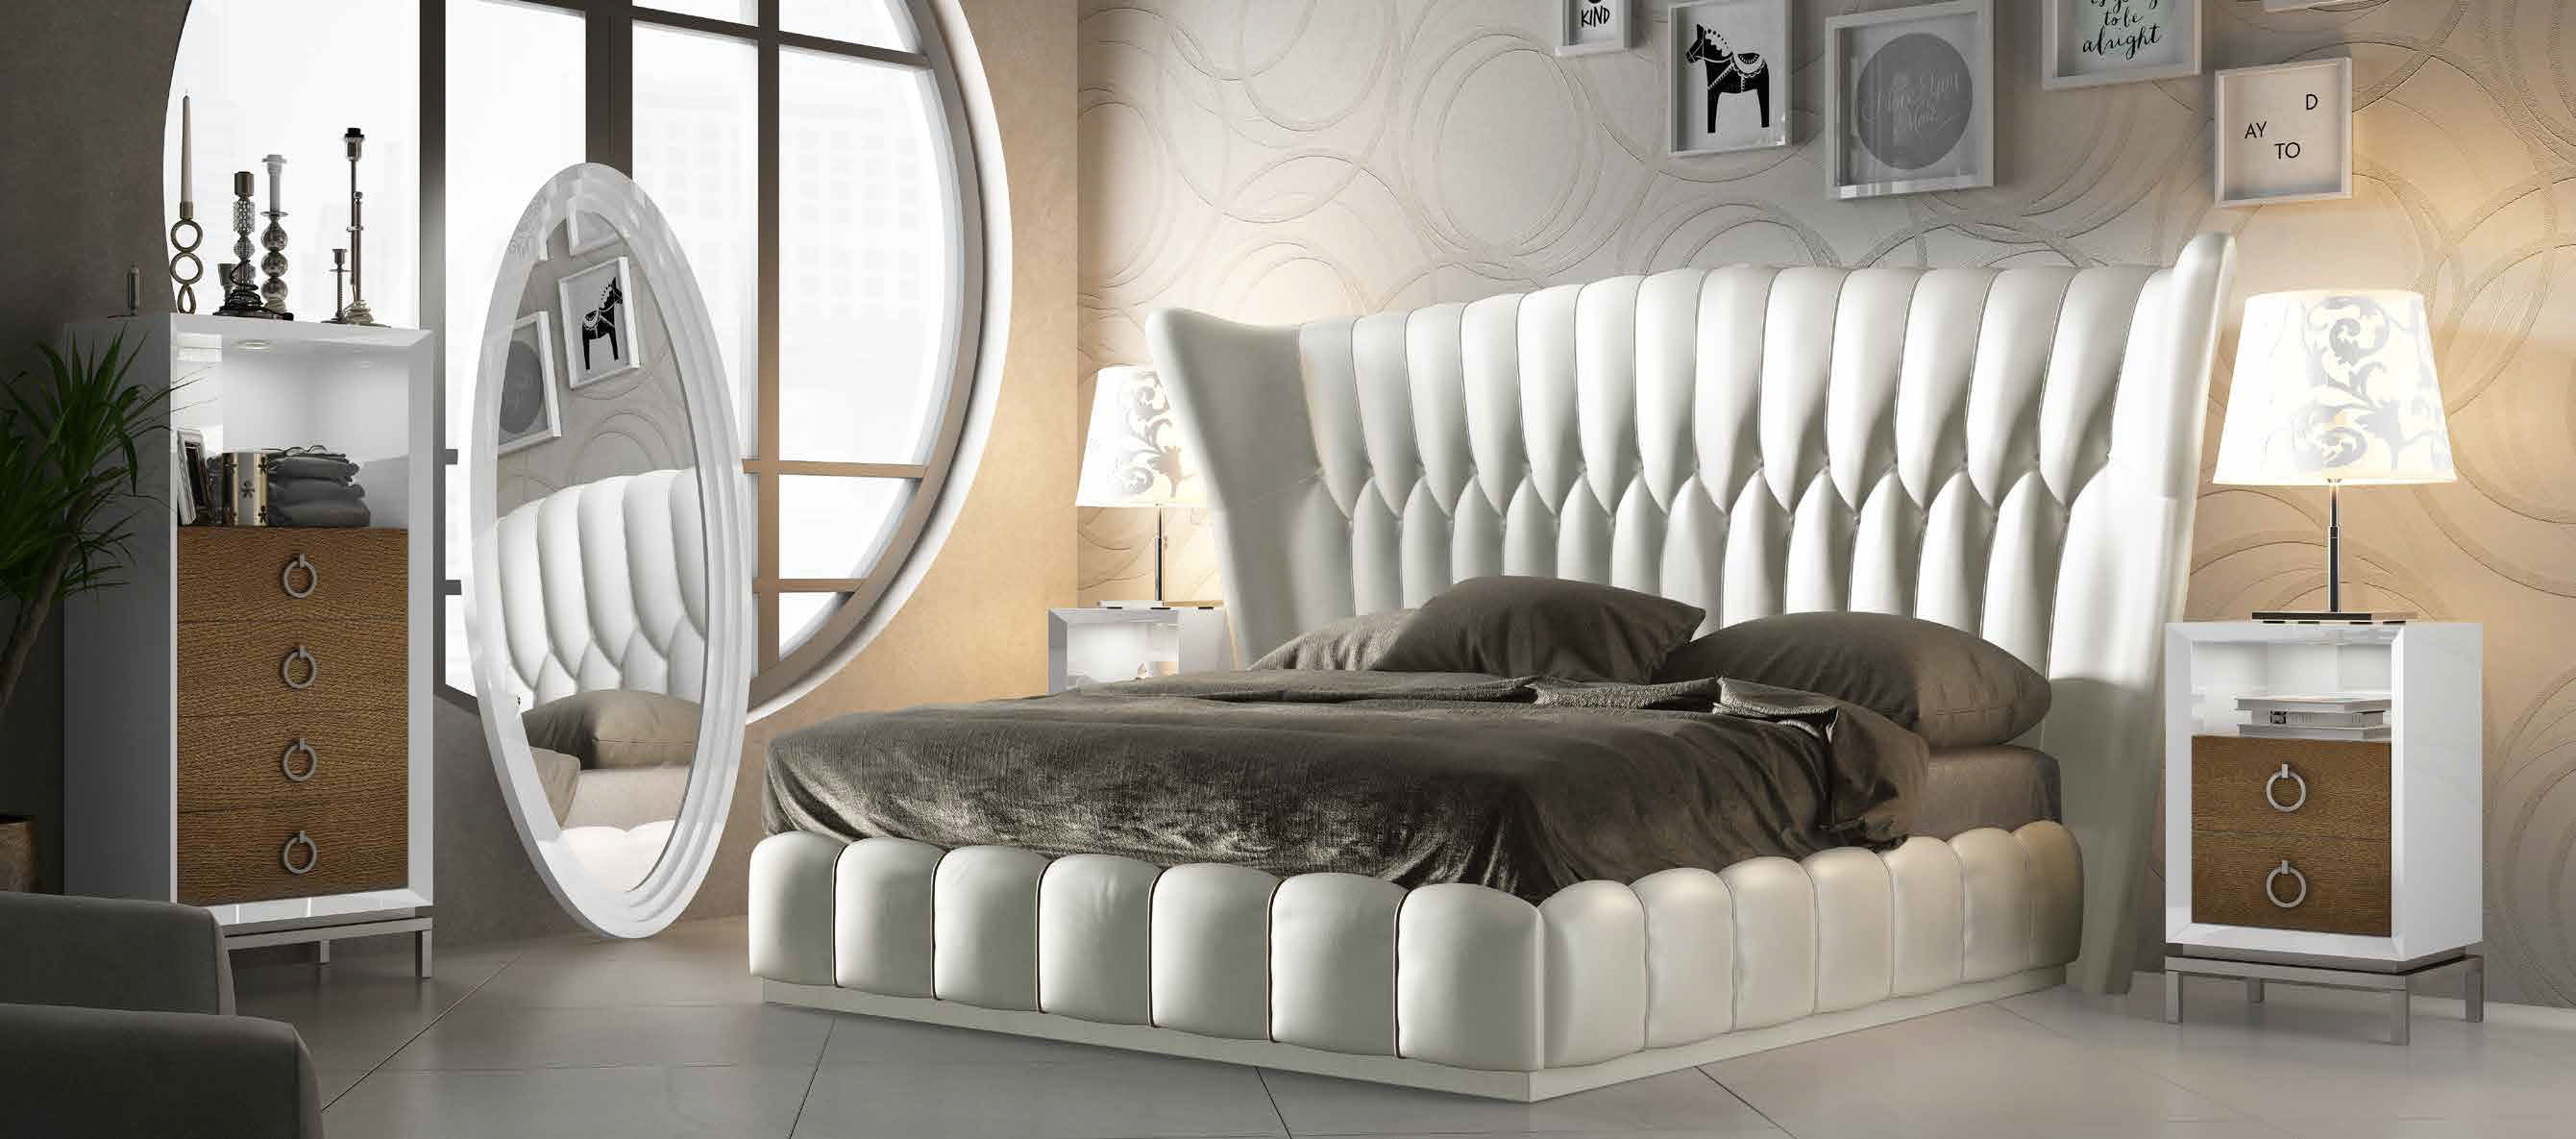 Brands Franco Furniture Bedrooms vol1, Spain DOR 50